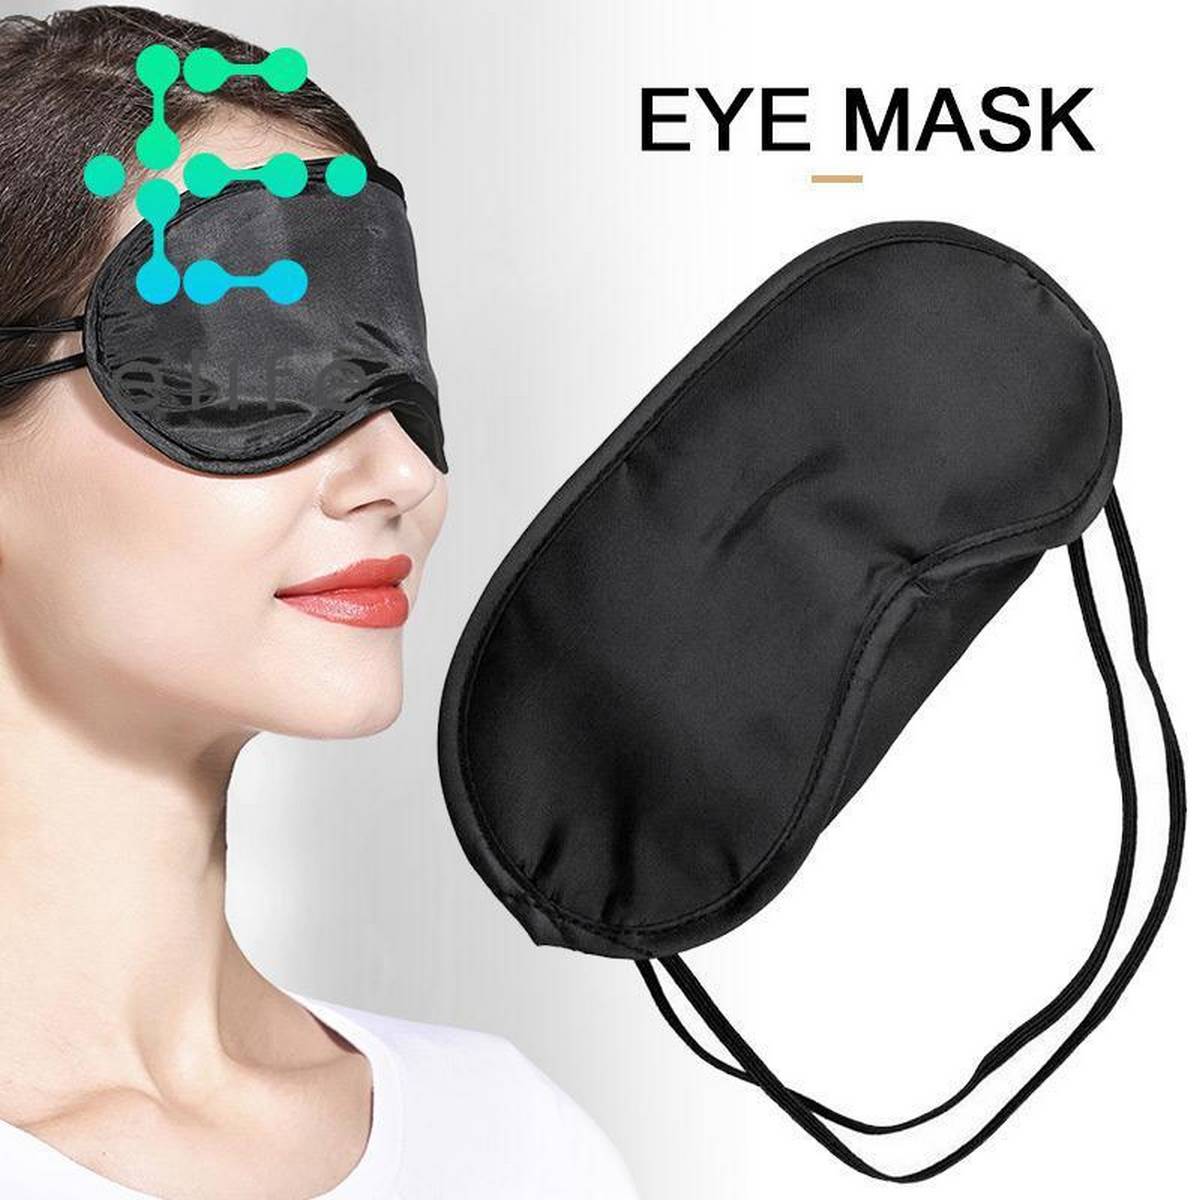 Travel Accessories Eye Mask For Sleeping Travel Sleeping Eye Mask